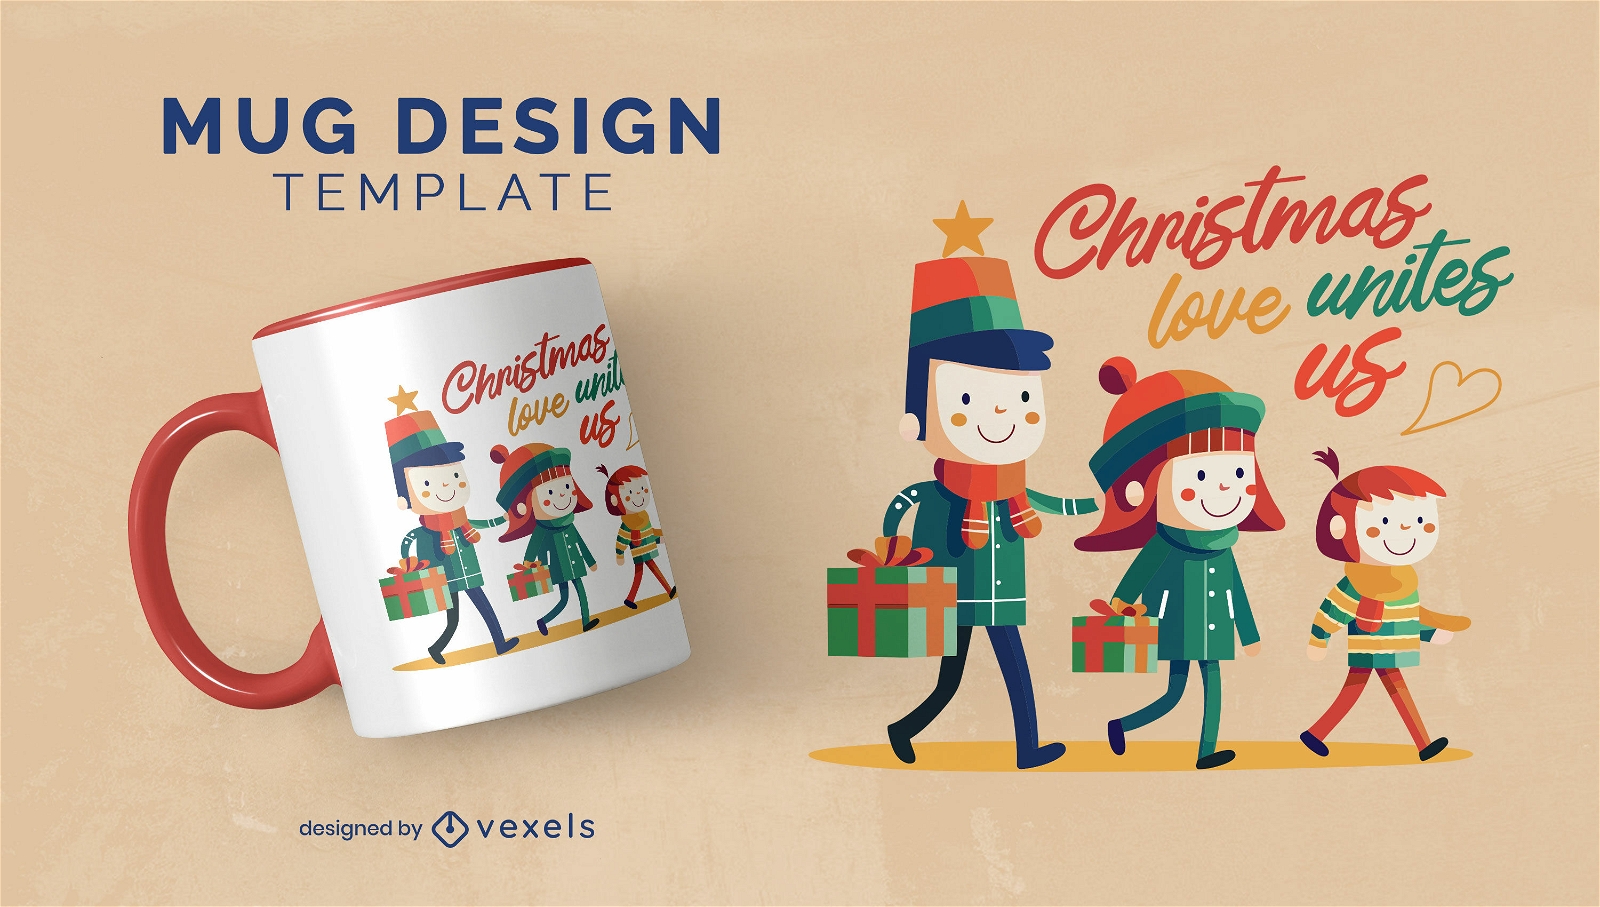 Christmas love unites us mug design